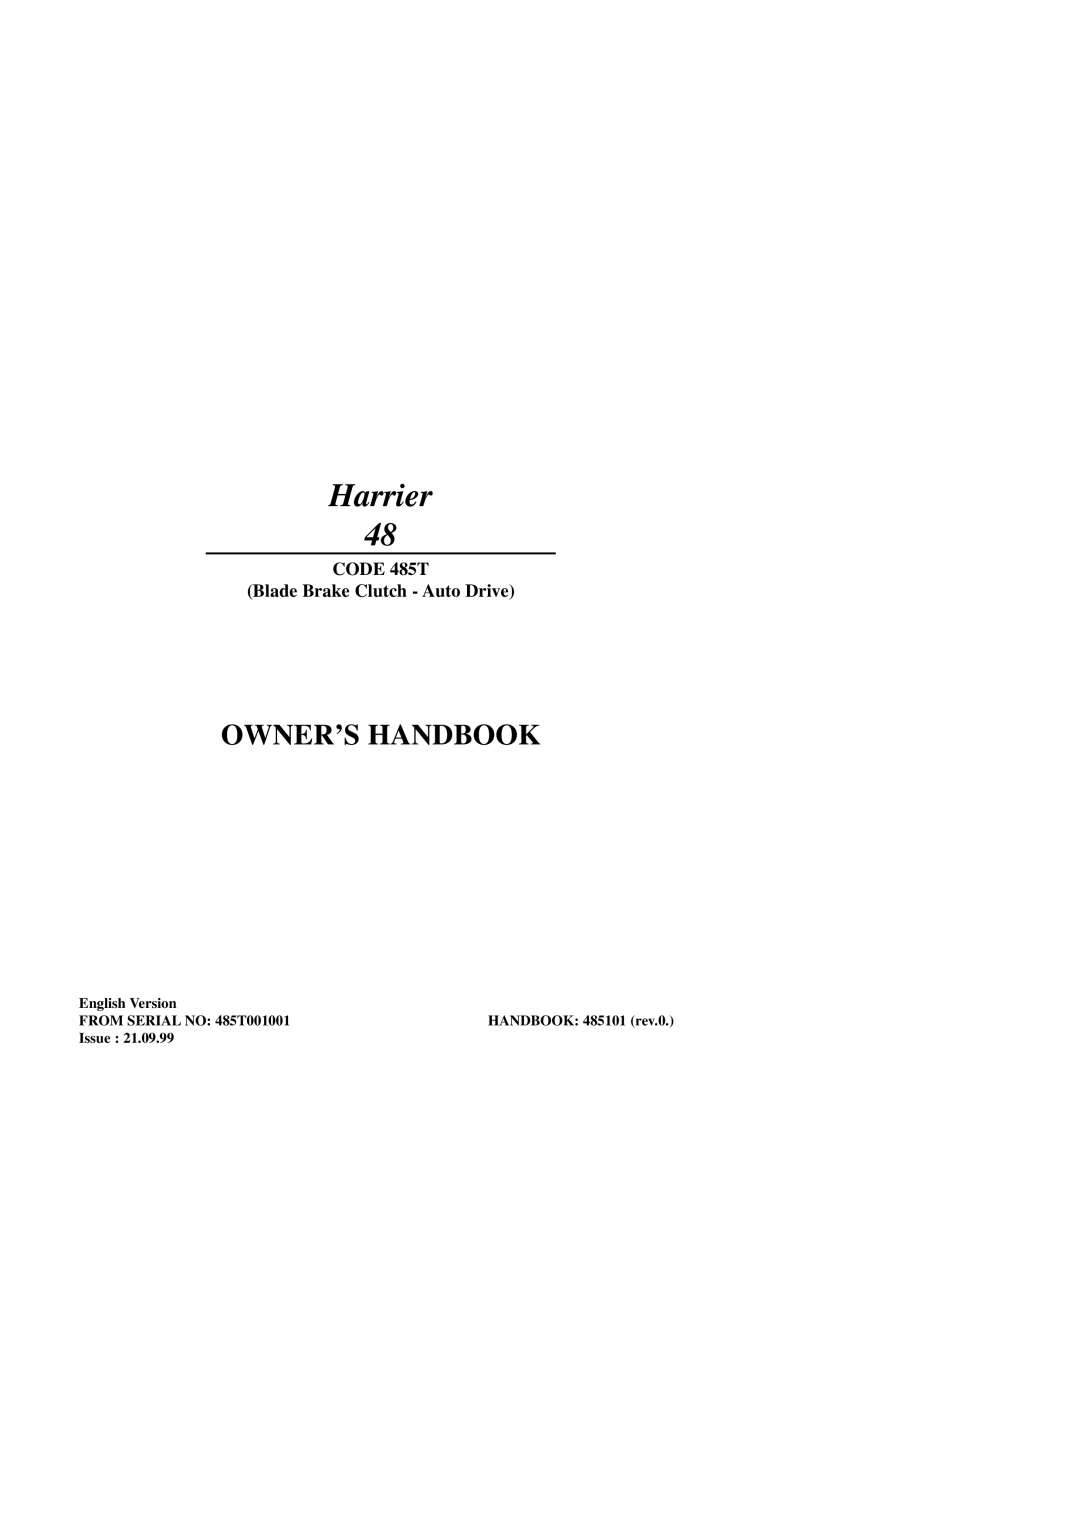 Hayter Mowers 48ST manual CODE 485T Blade Brake Clutch - Auto Drive, Harrier, Owner’S Handbook, HANDBOOK 485101 rev.0 